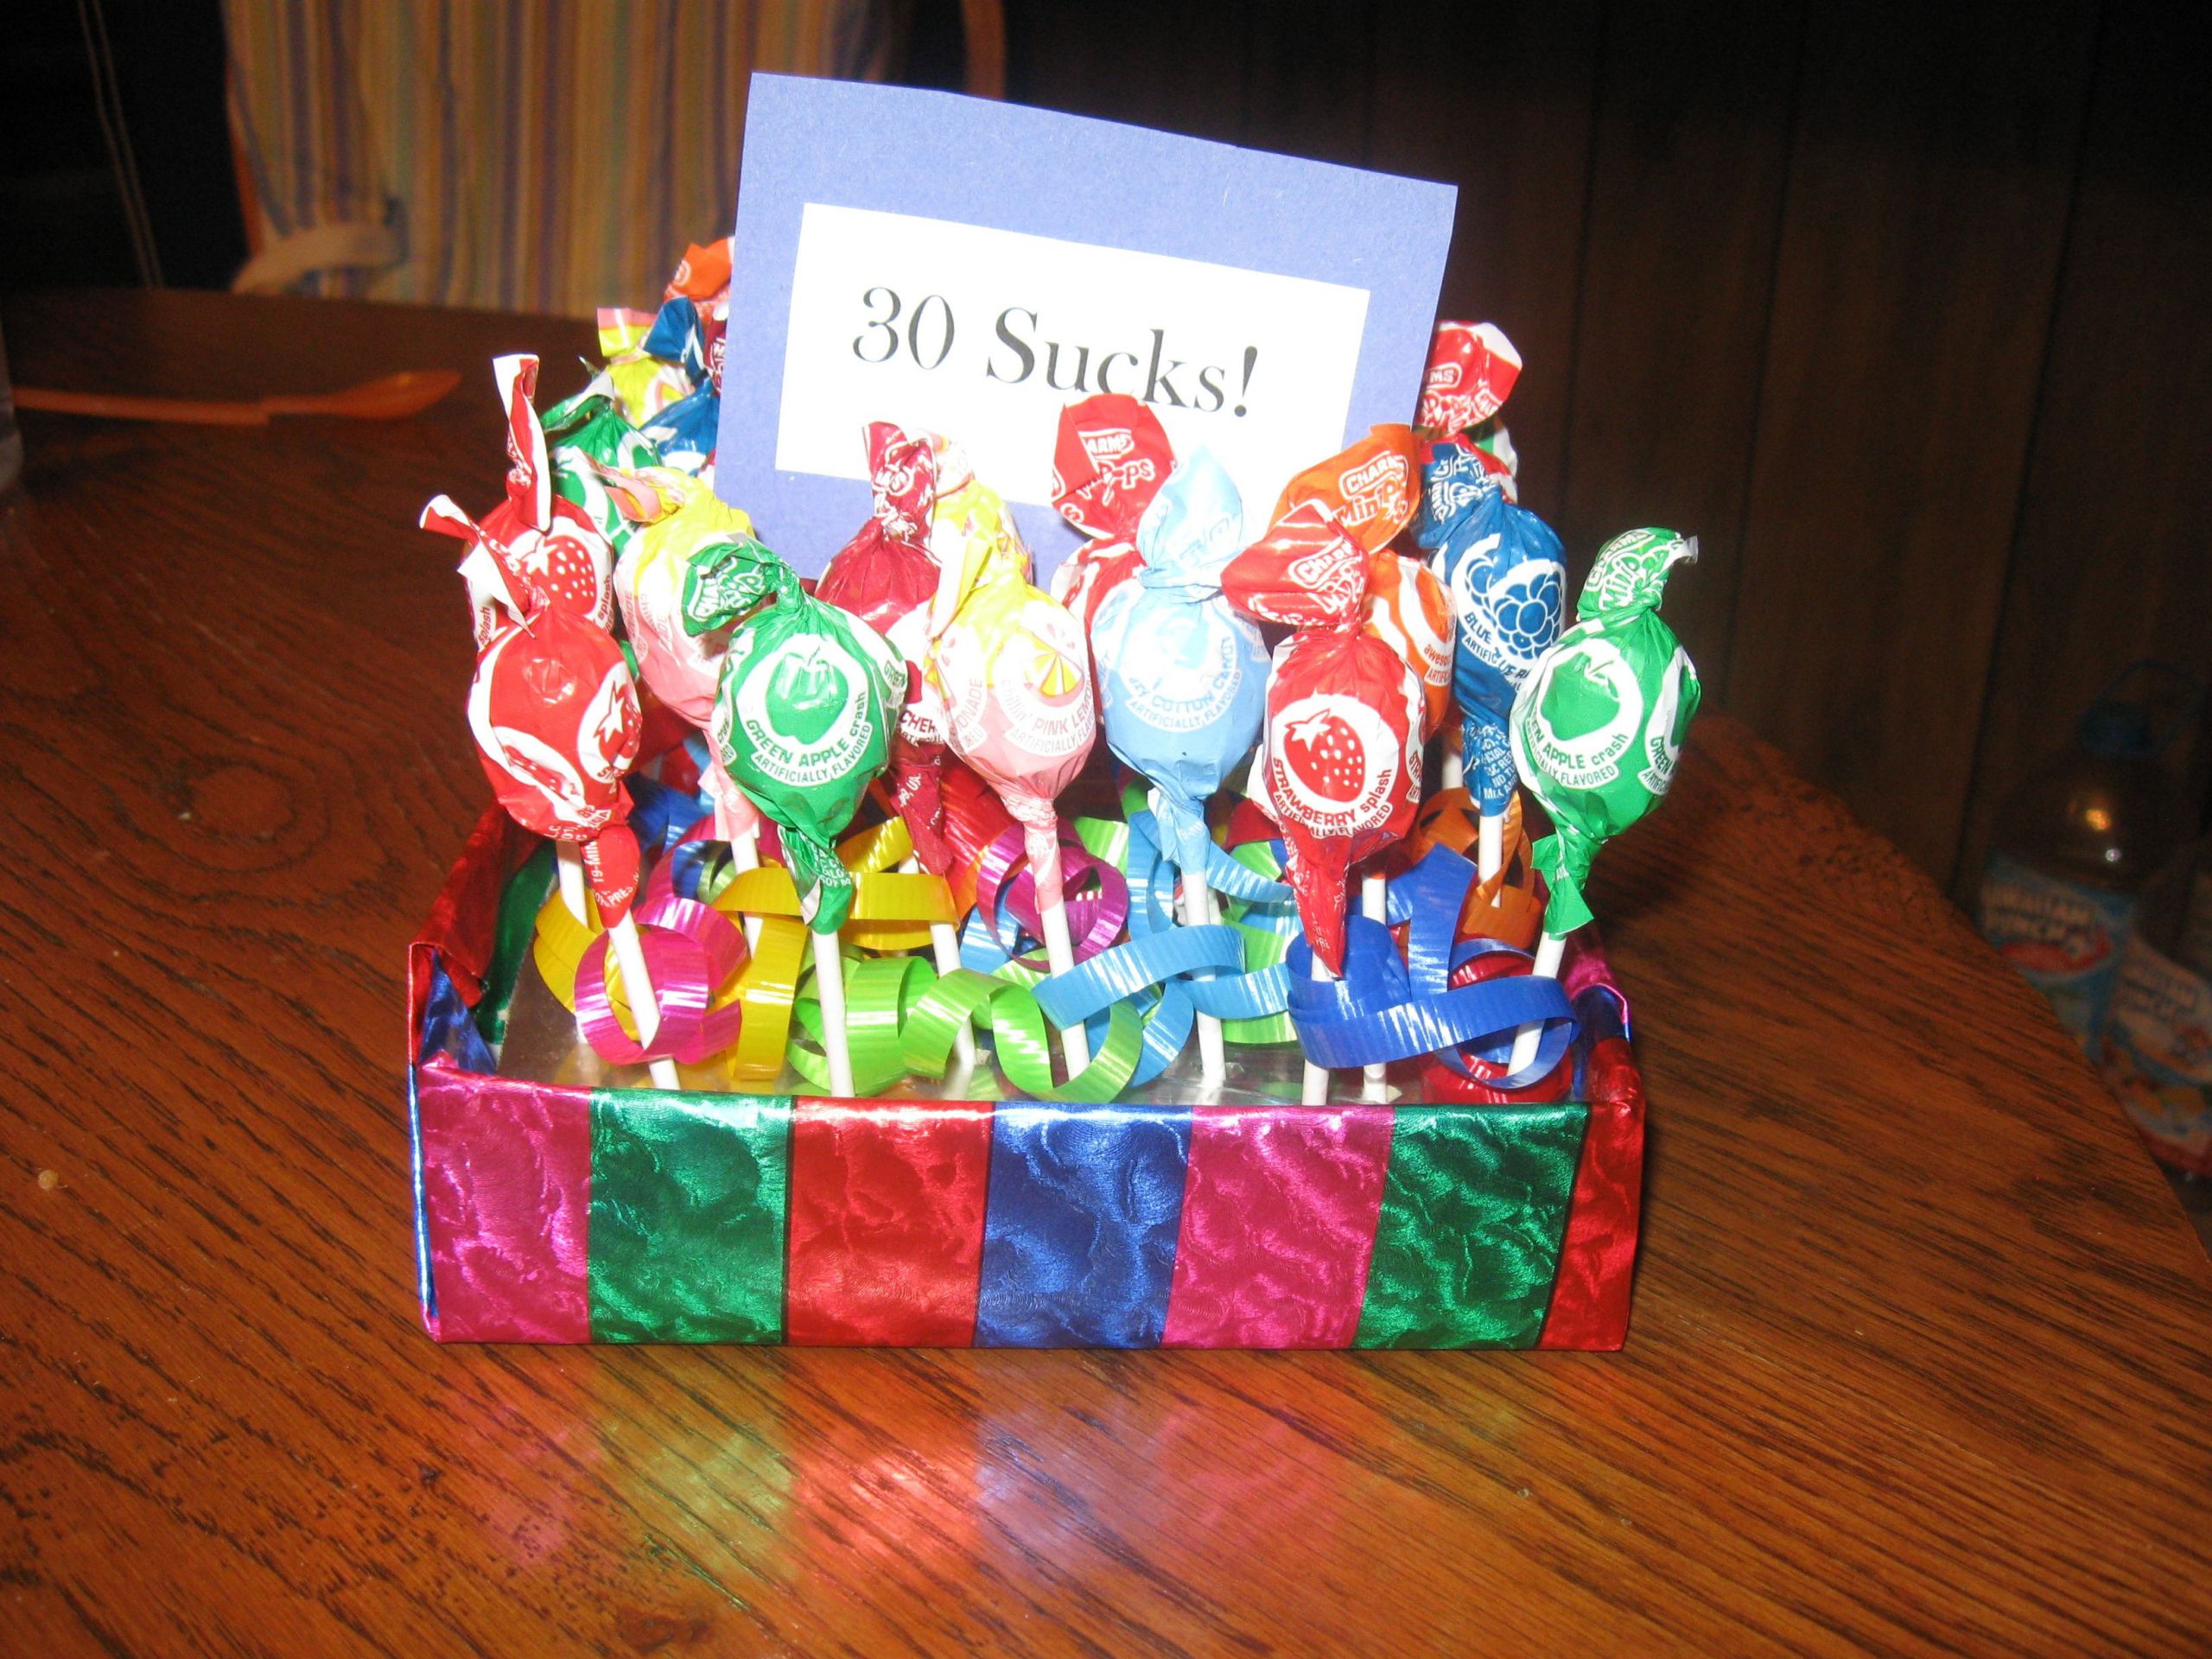 Coworker Birthday Gift Ideas
 30th birthday idea 30 sucks t I created for a